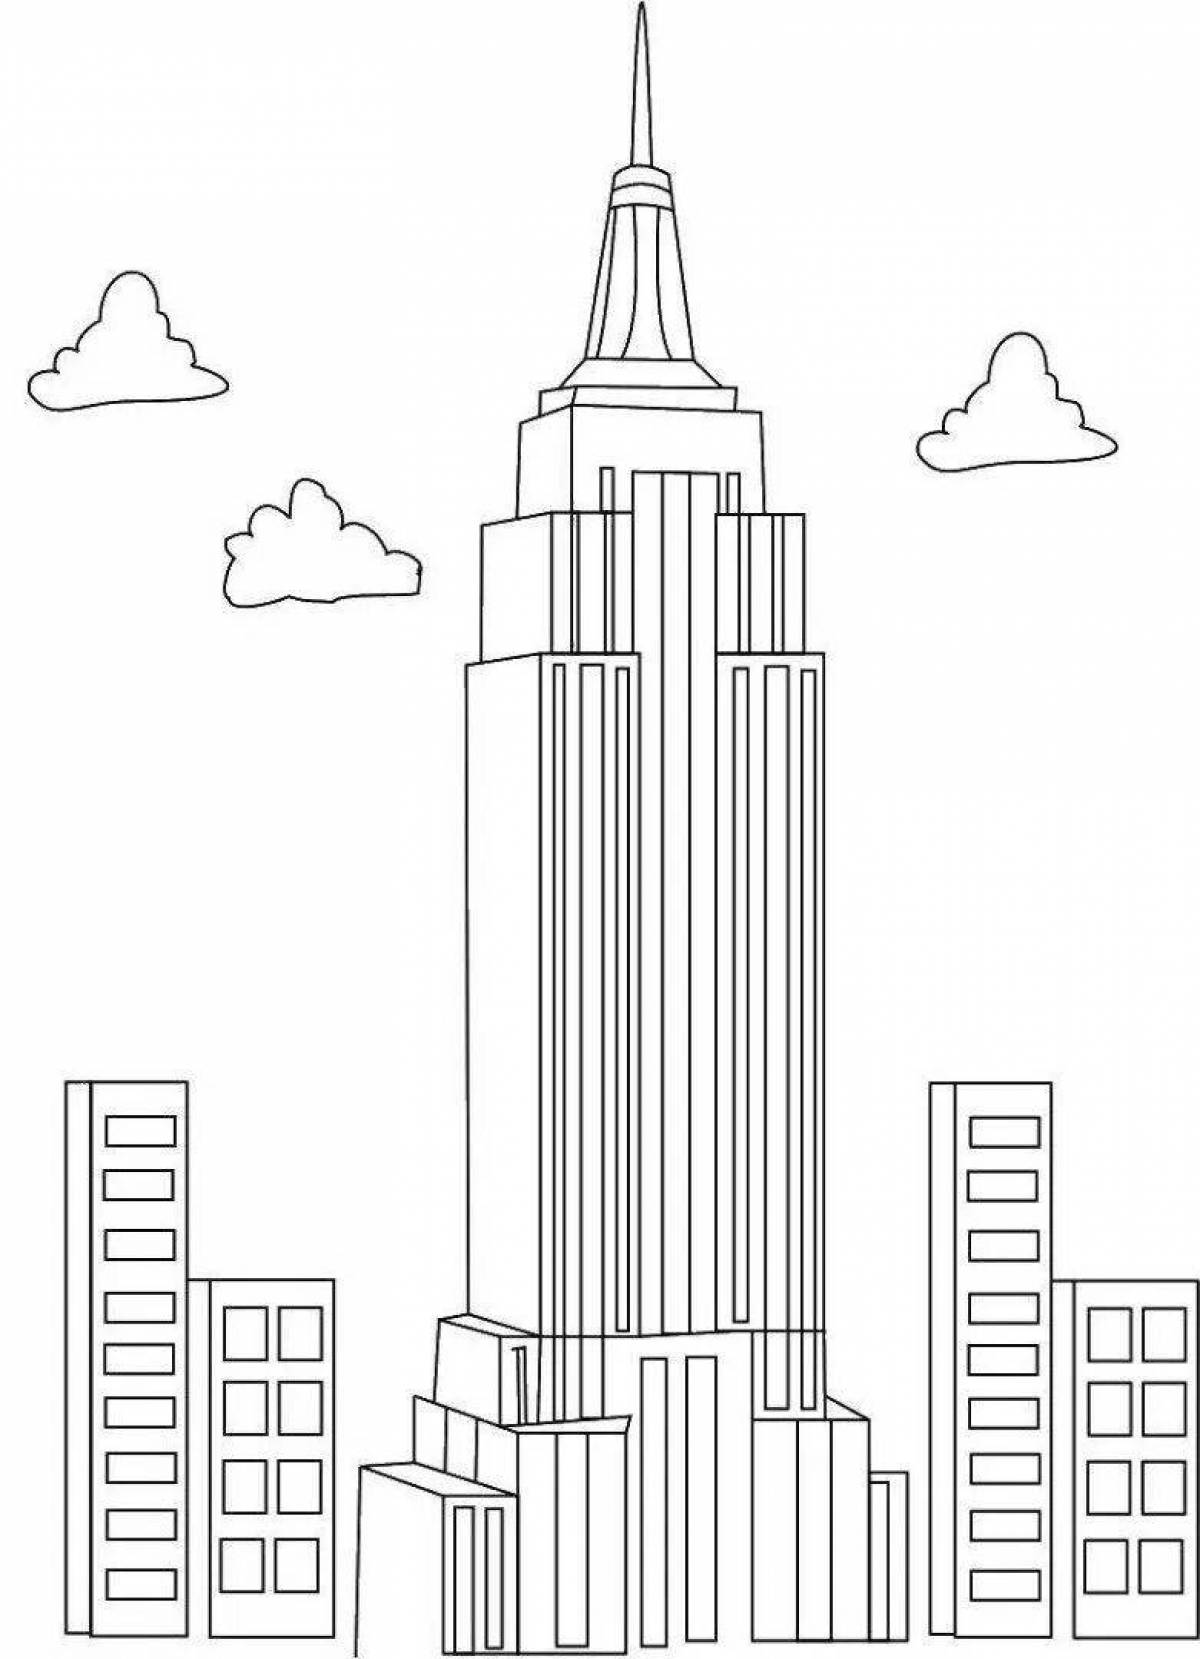 Shining skyscraper coloring book for kids